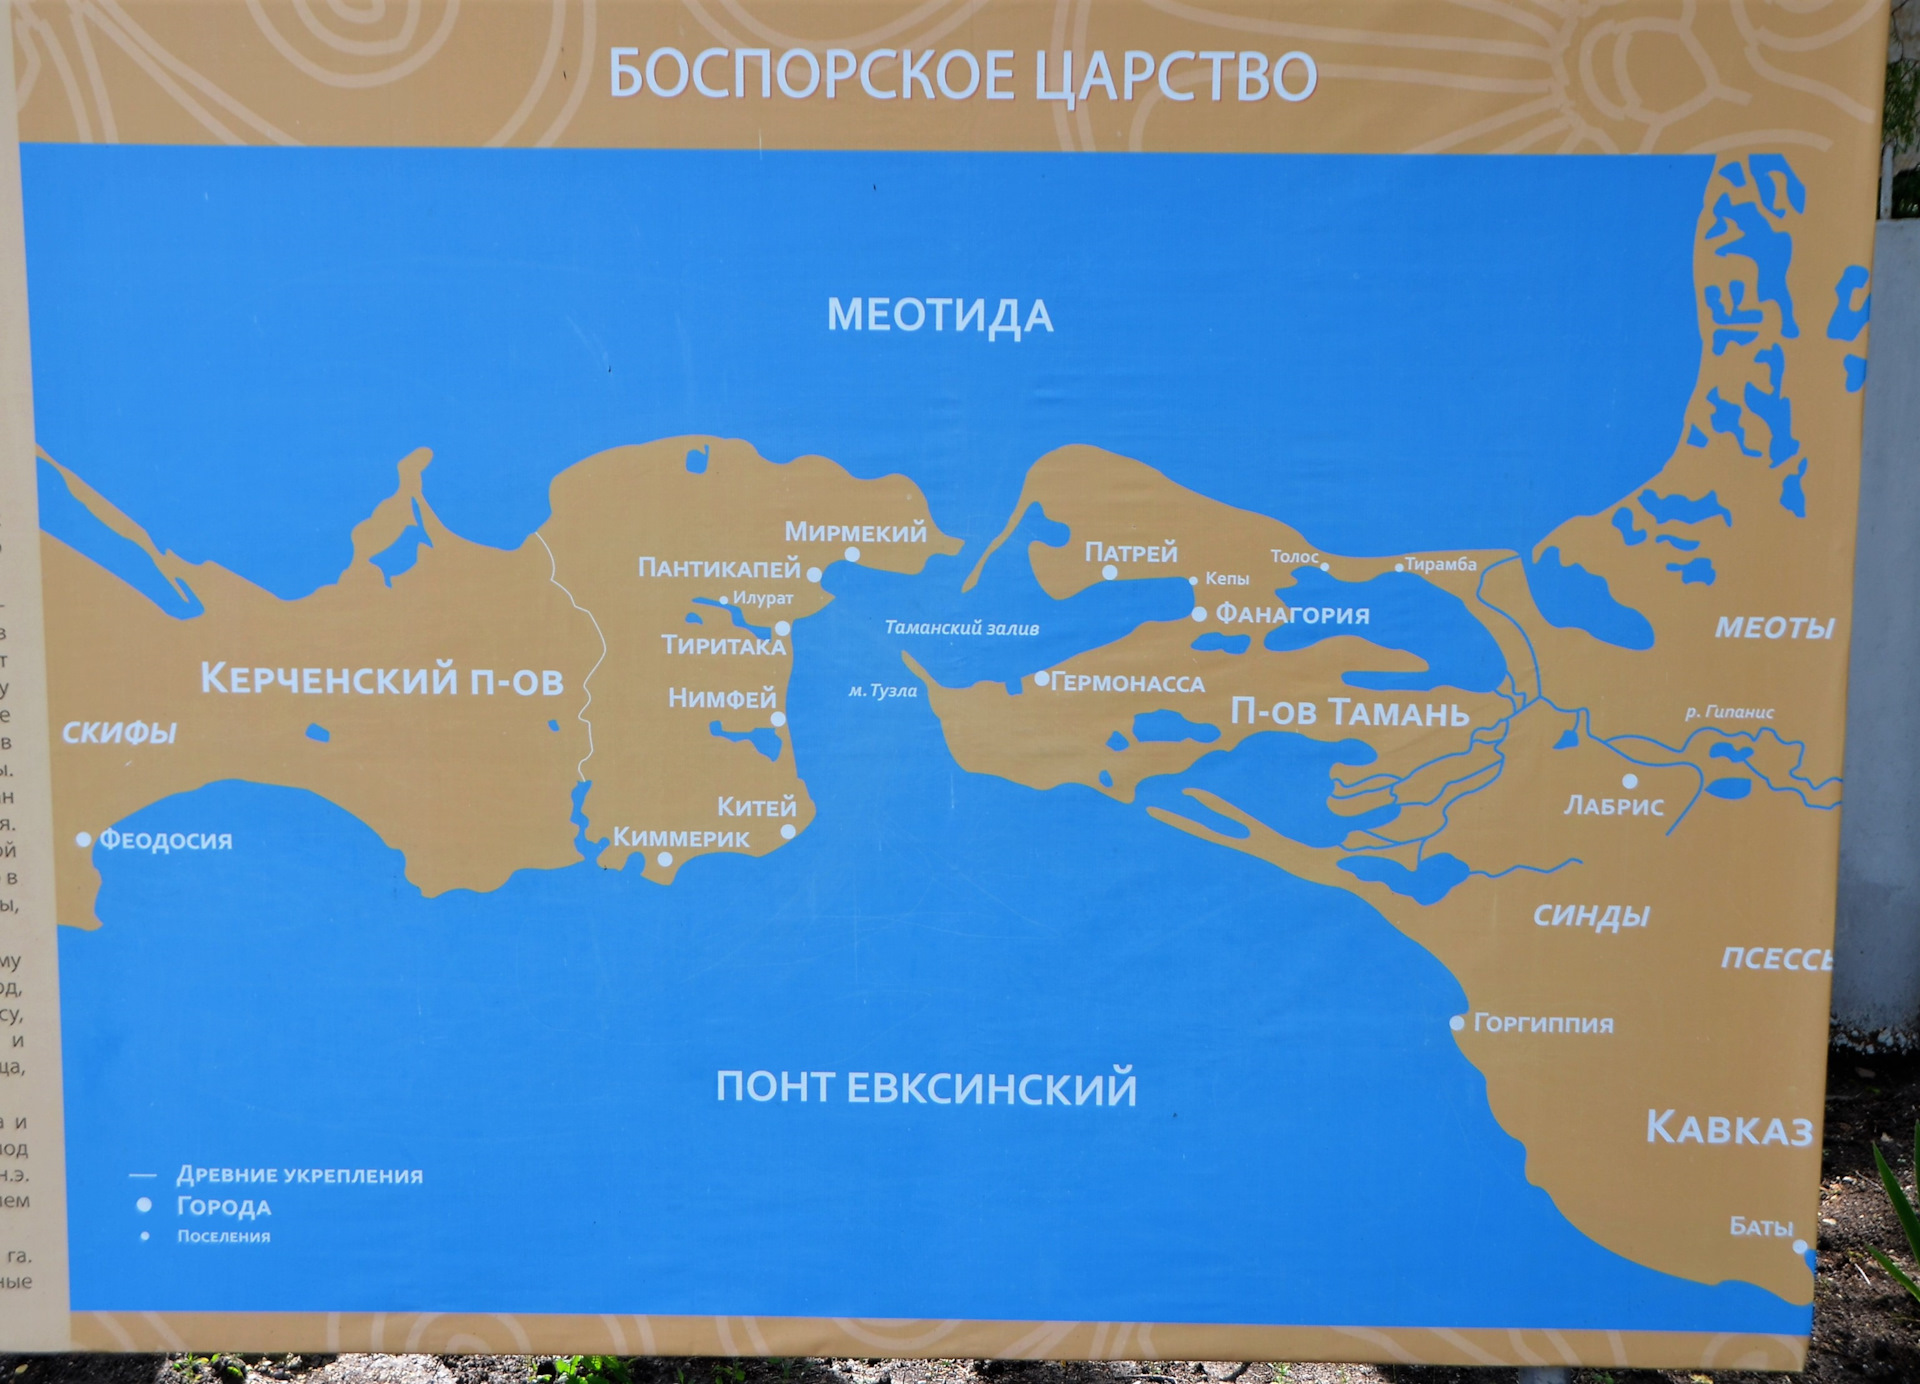 Династии боспорского царства. Боспорское царство Горгипп. Горгиппия на карте. Боспорское царство на карте.